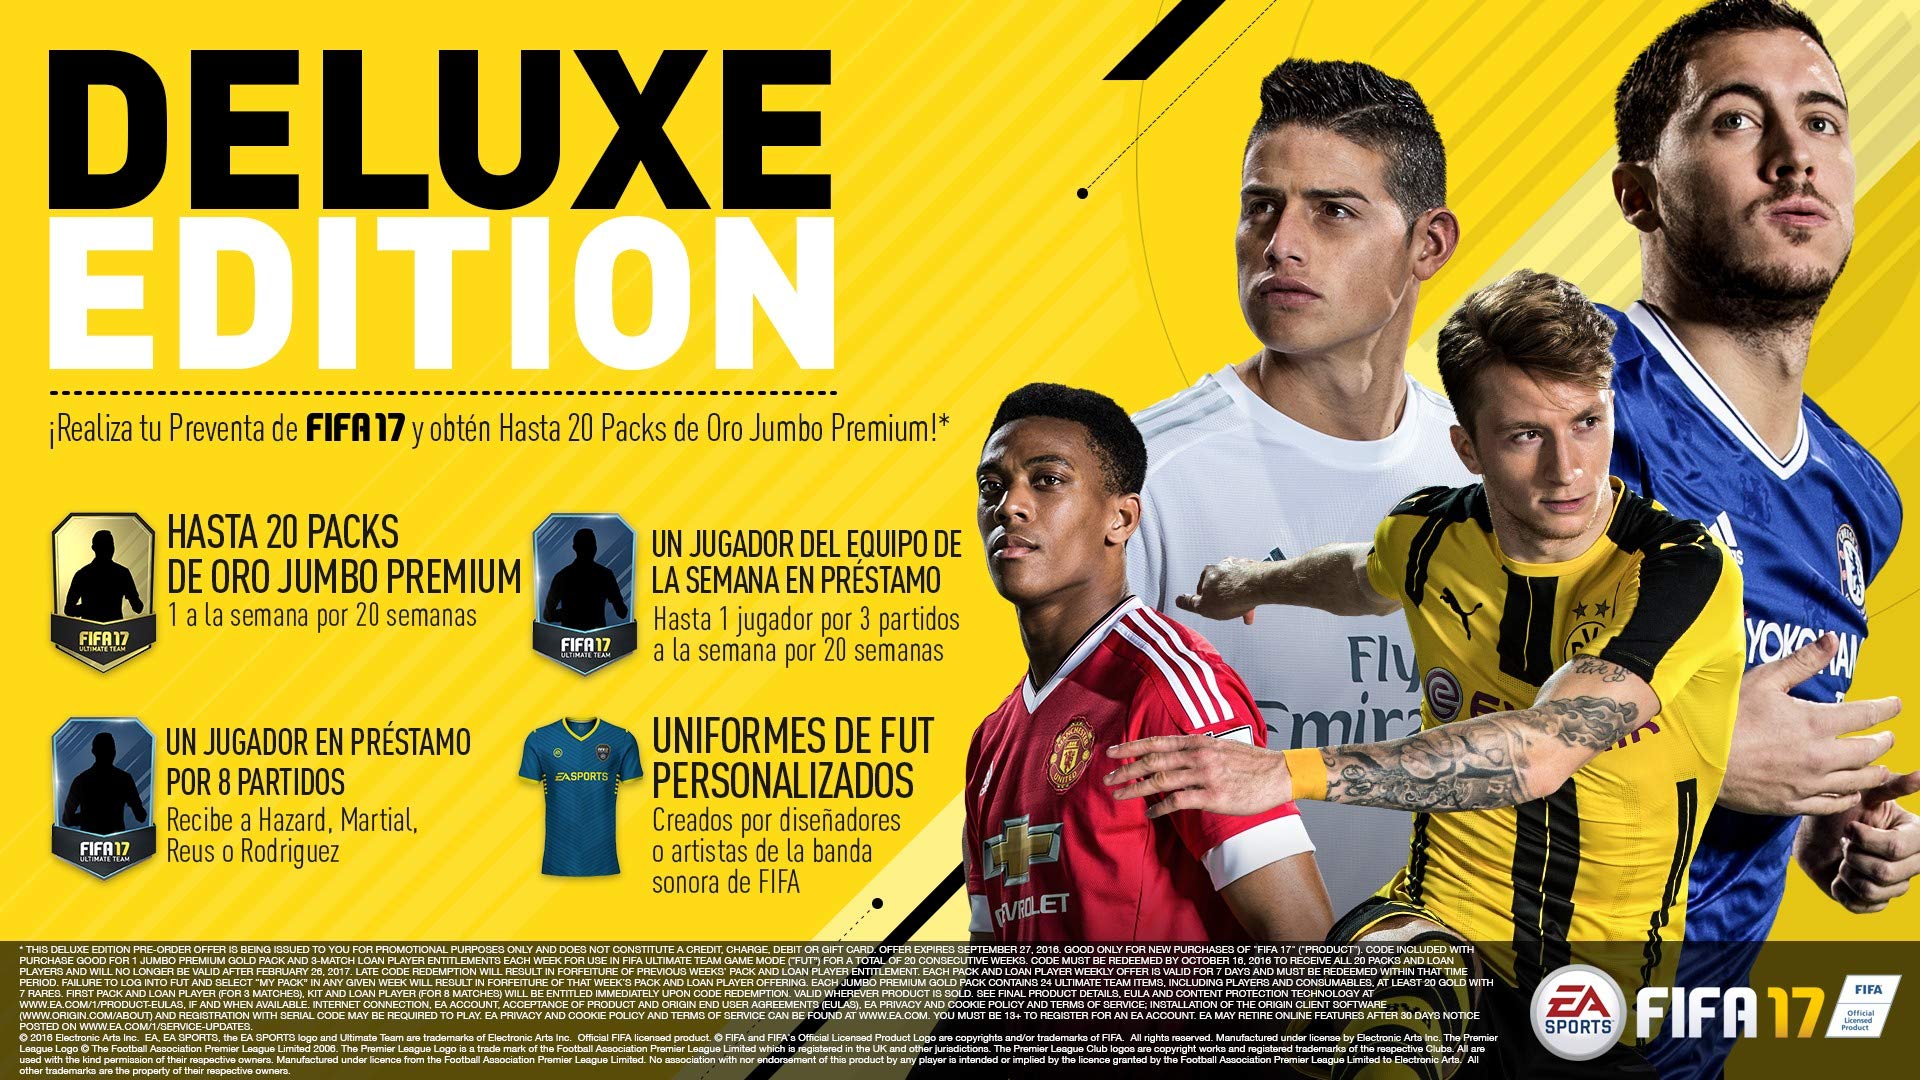 Deluxe Edition Fifa 17 - HD Wallpaper 